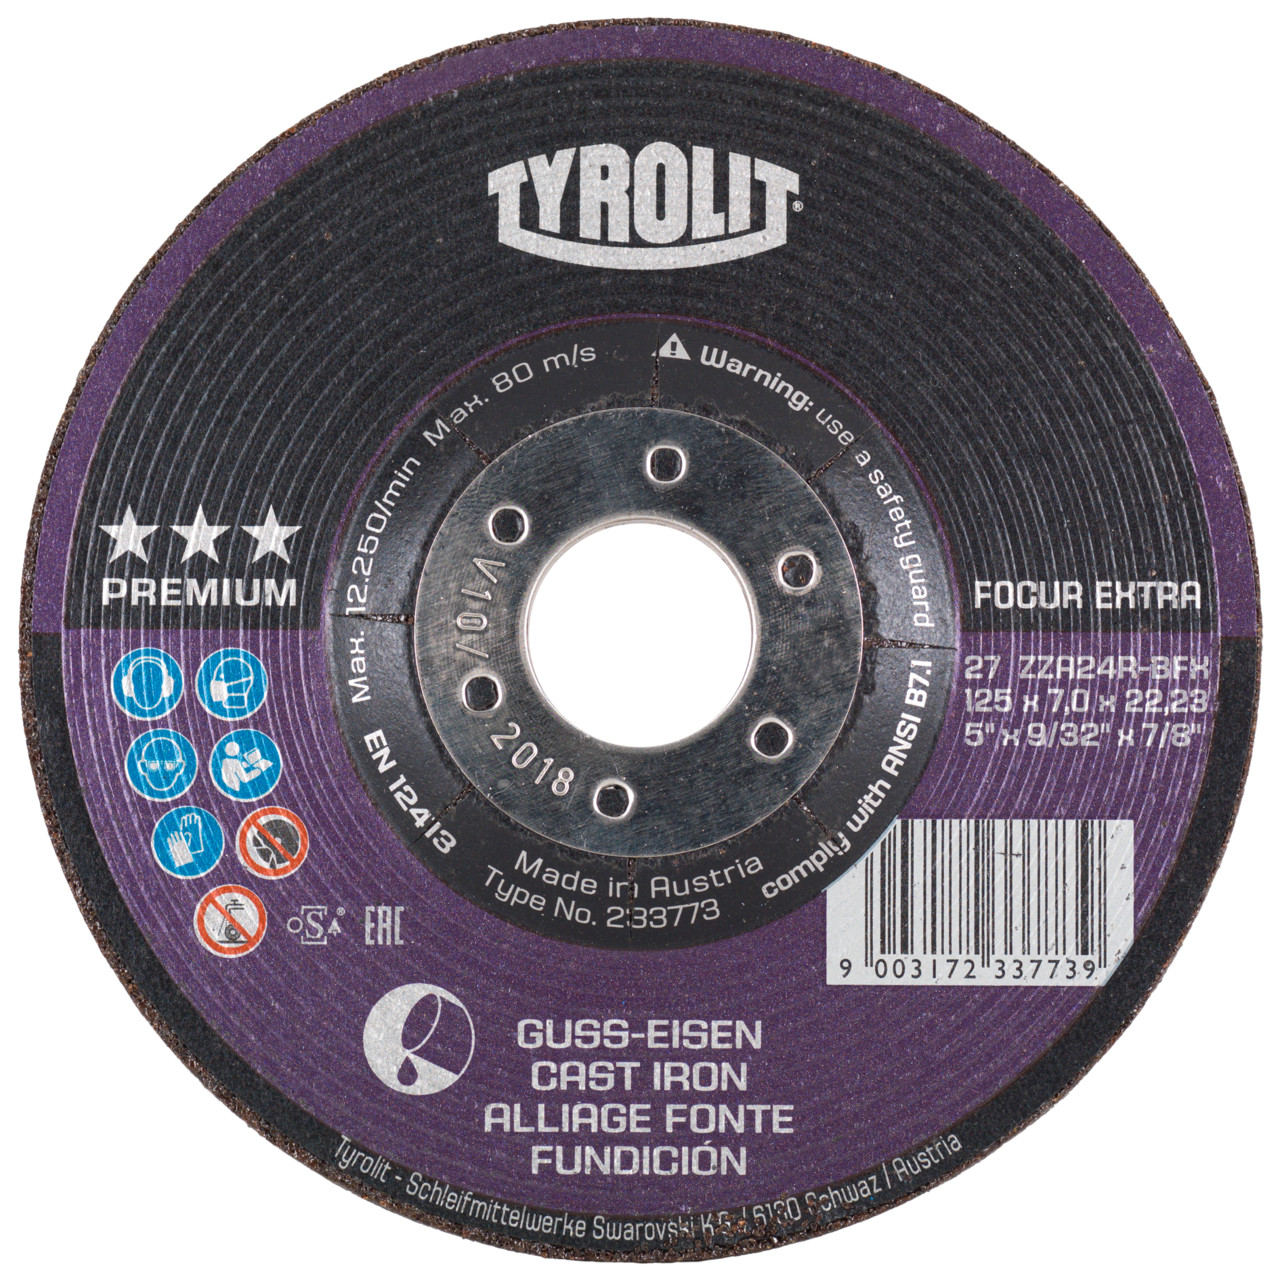 Tyrolit Roughing disc DxUxH 125x7x22.23 FOCUR Extra for cast iron, shape: 27 - offset version, Art. 233756